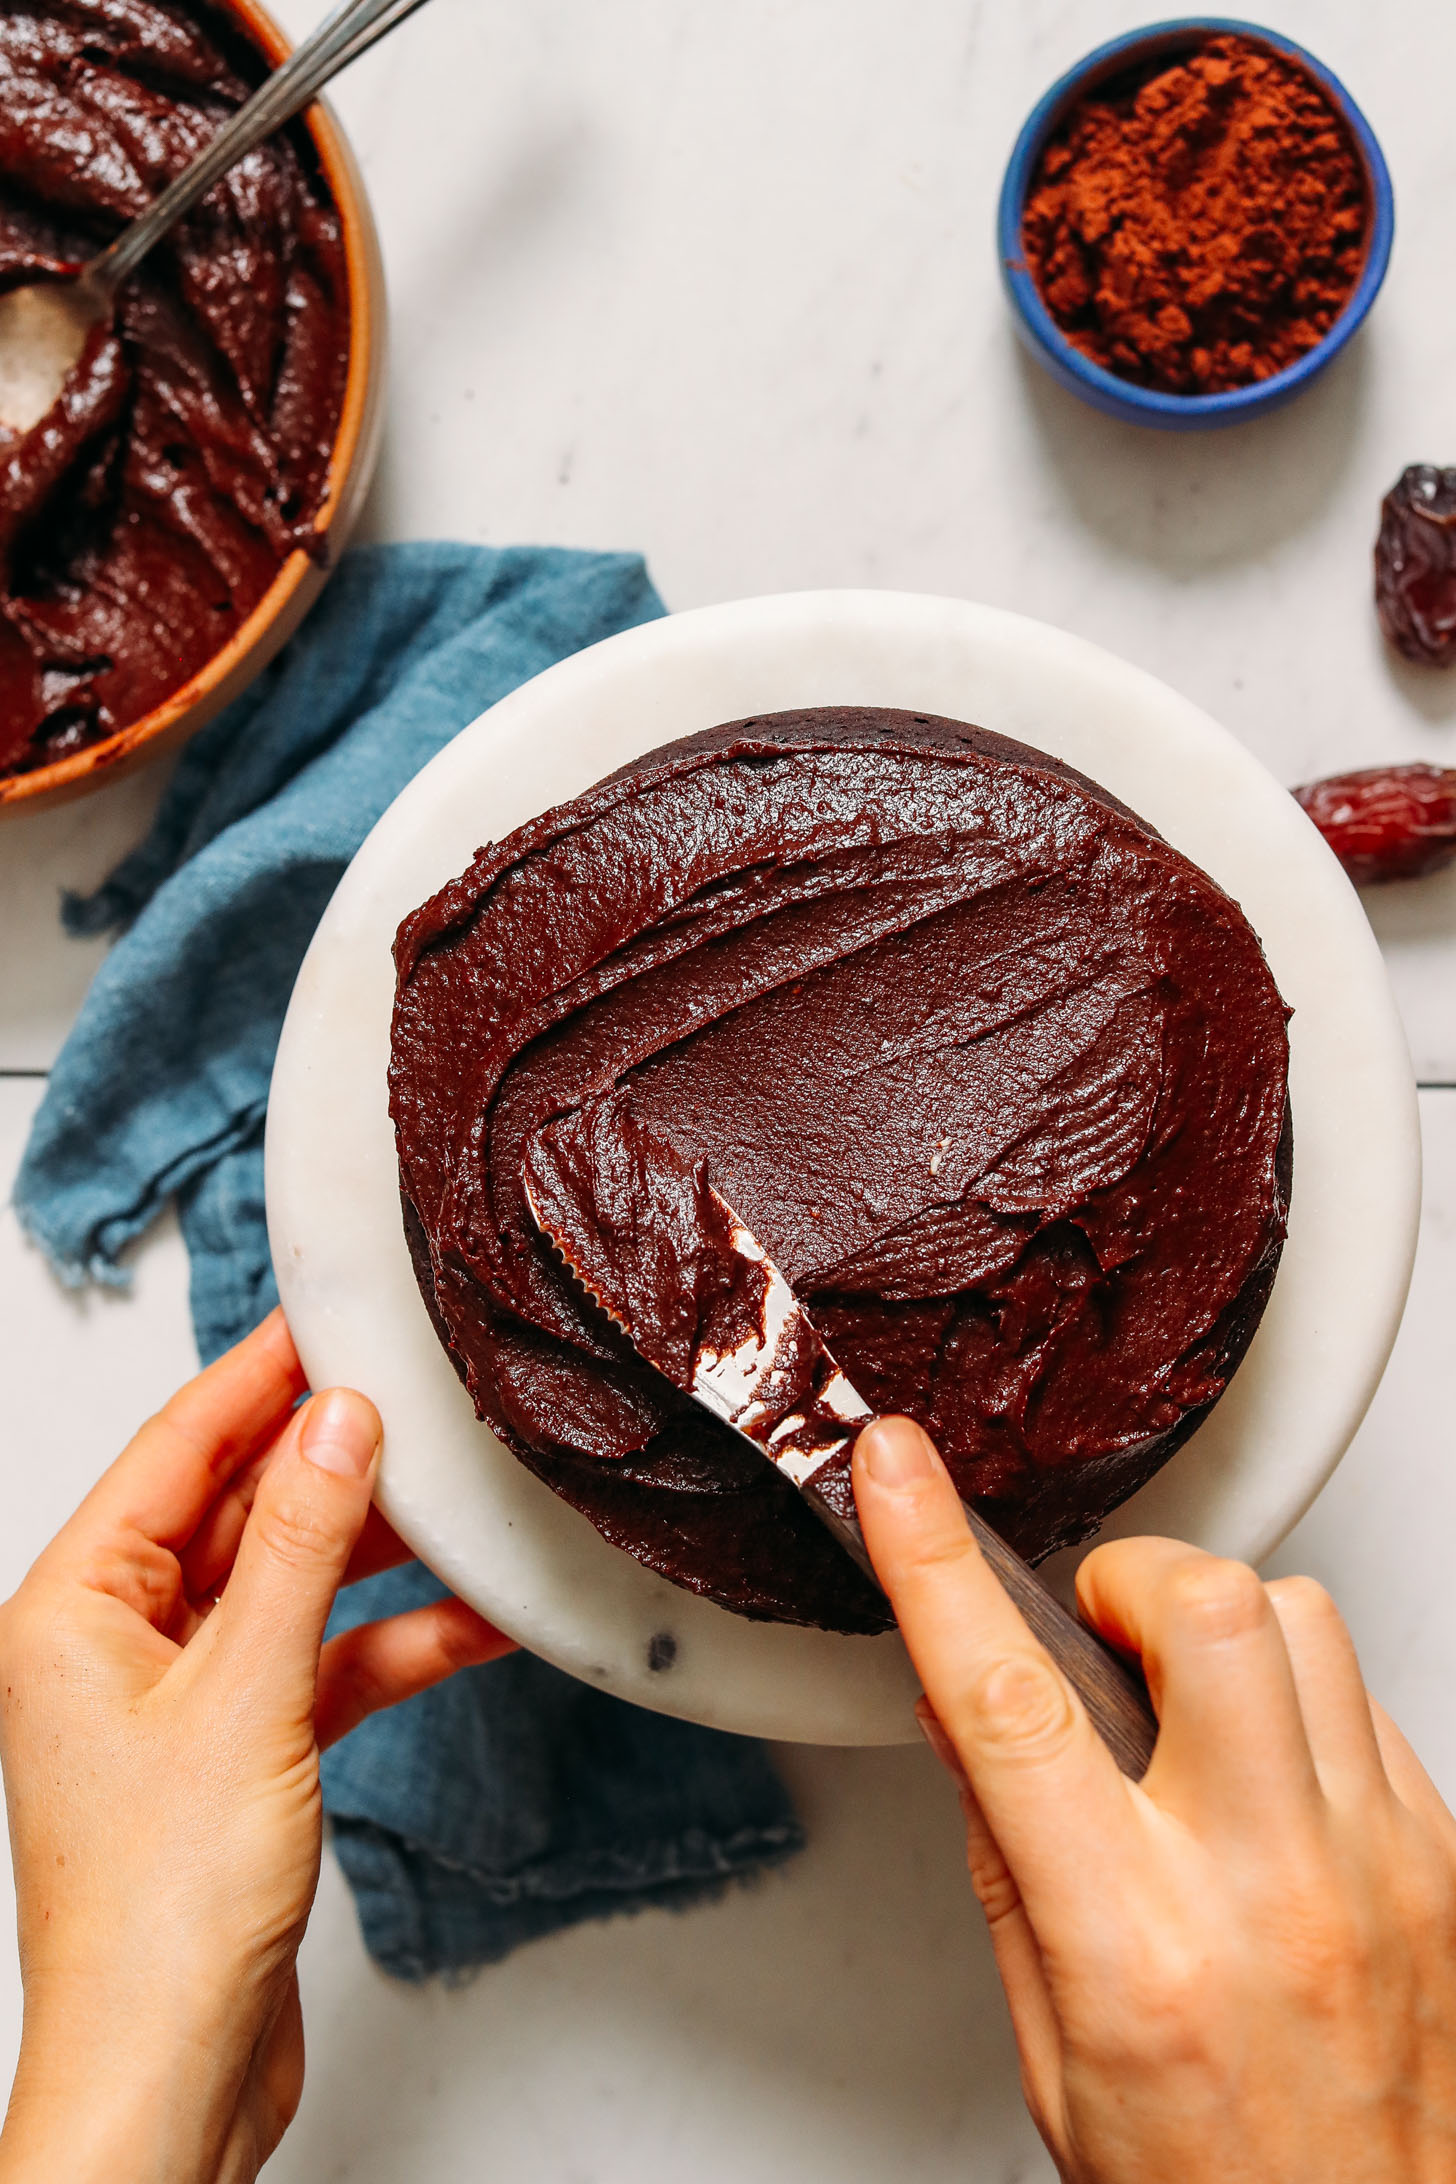 Spreading vegan chocolate frosting onto a chocolate cake